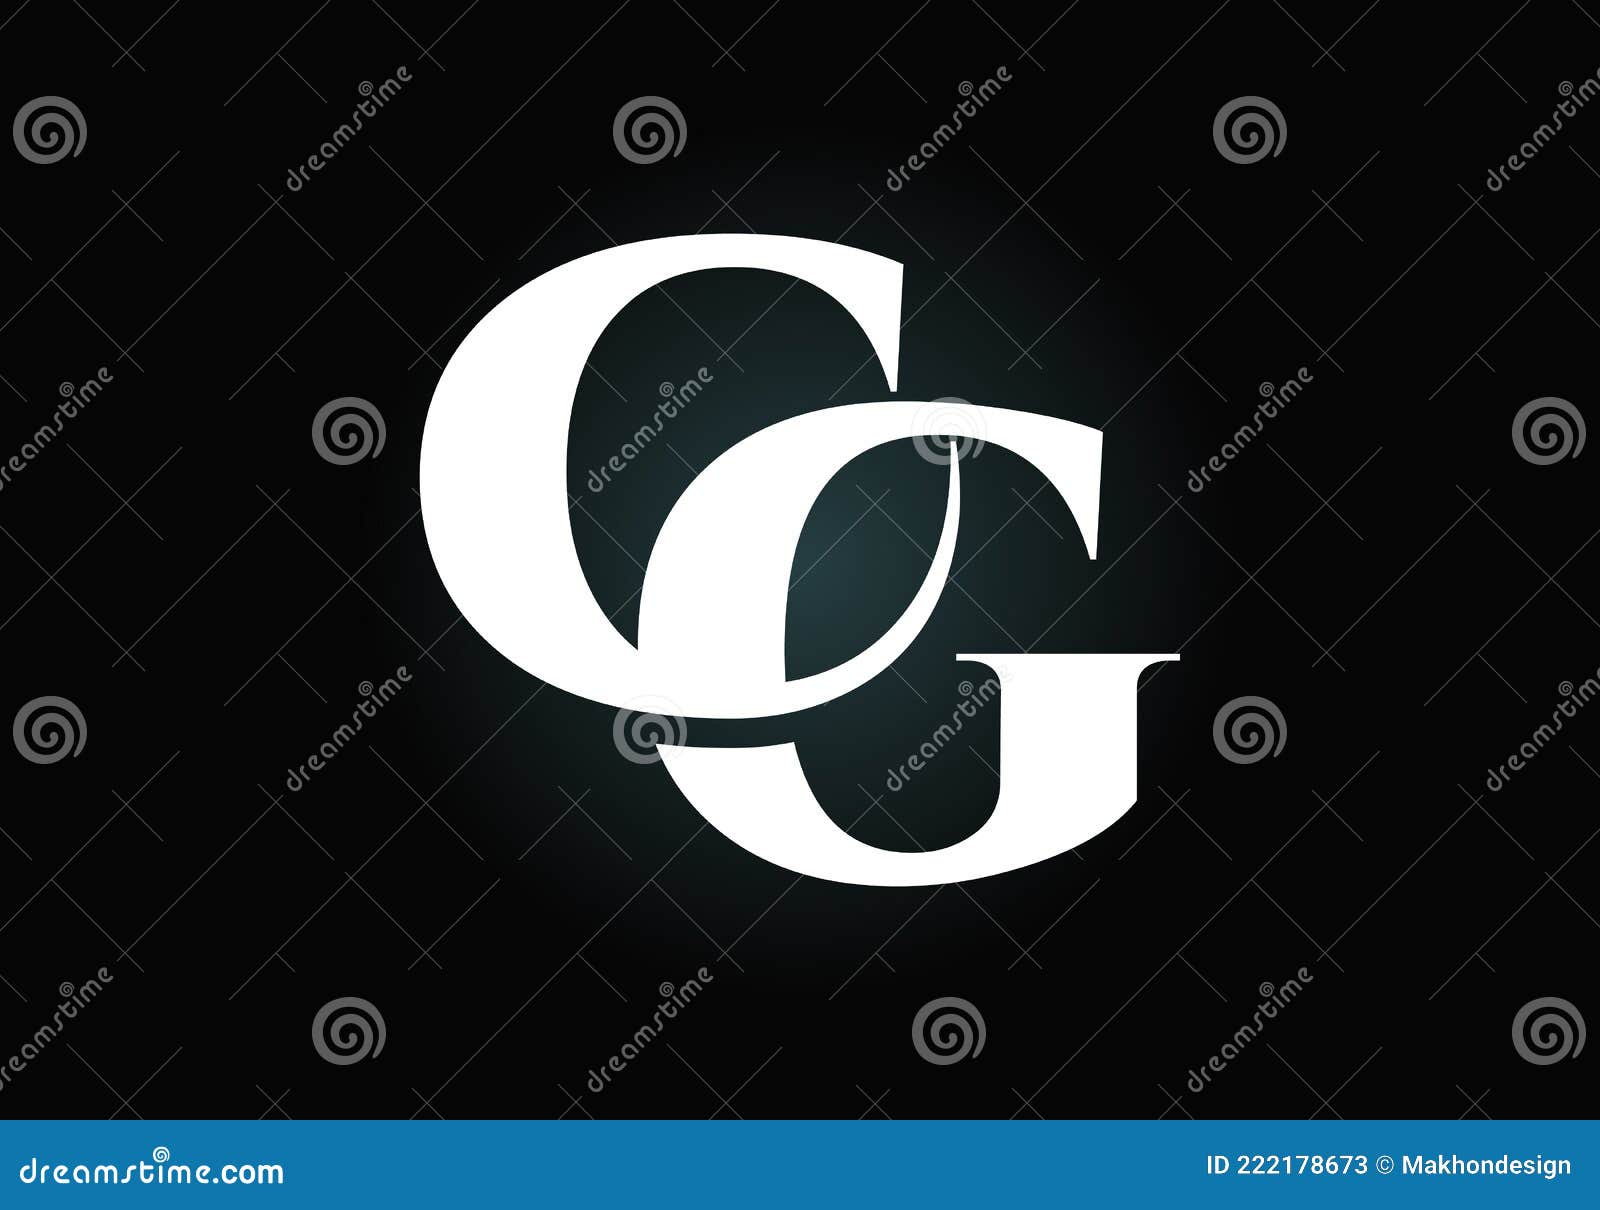 Share more than 83 creative cg logo best